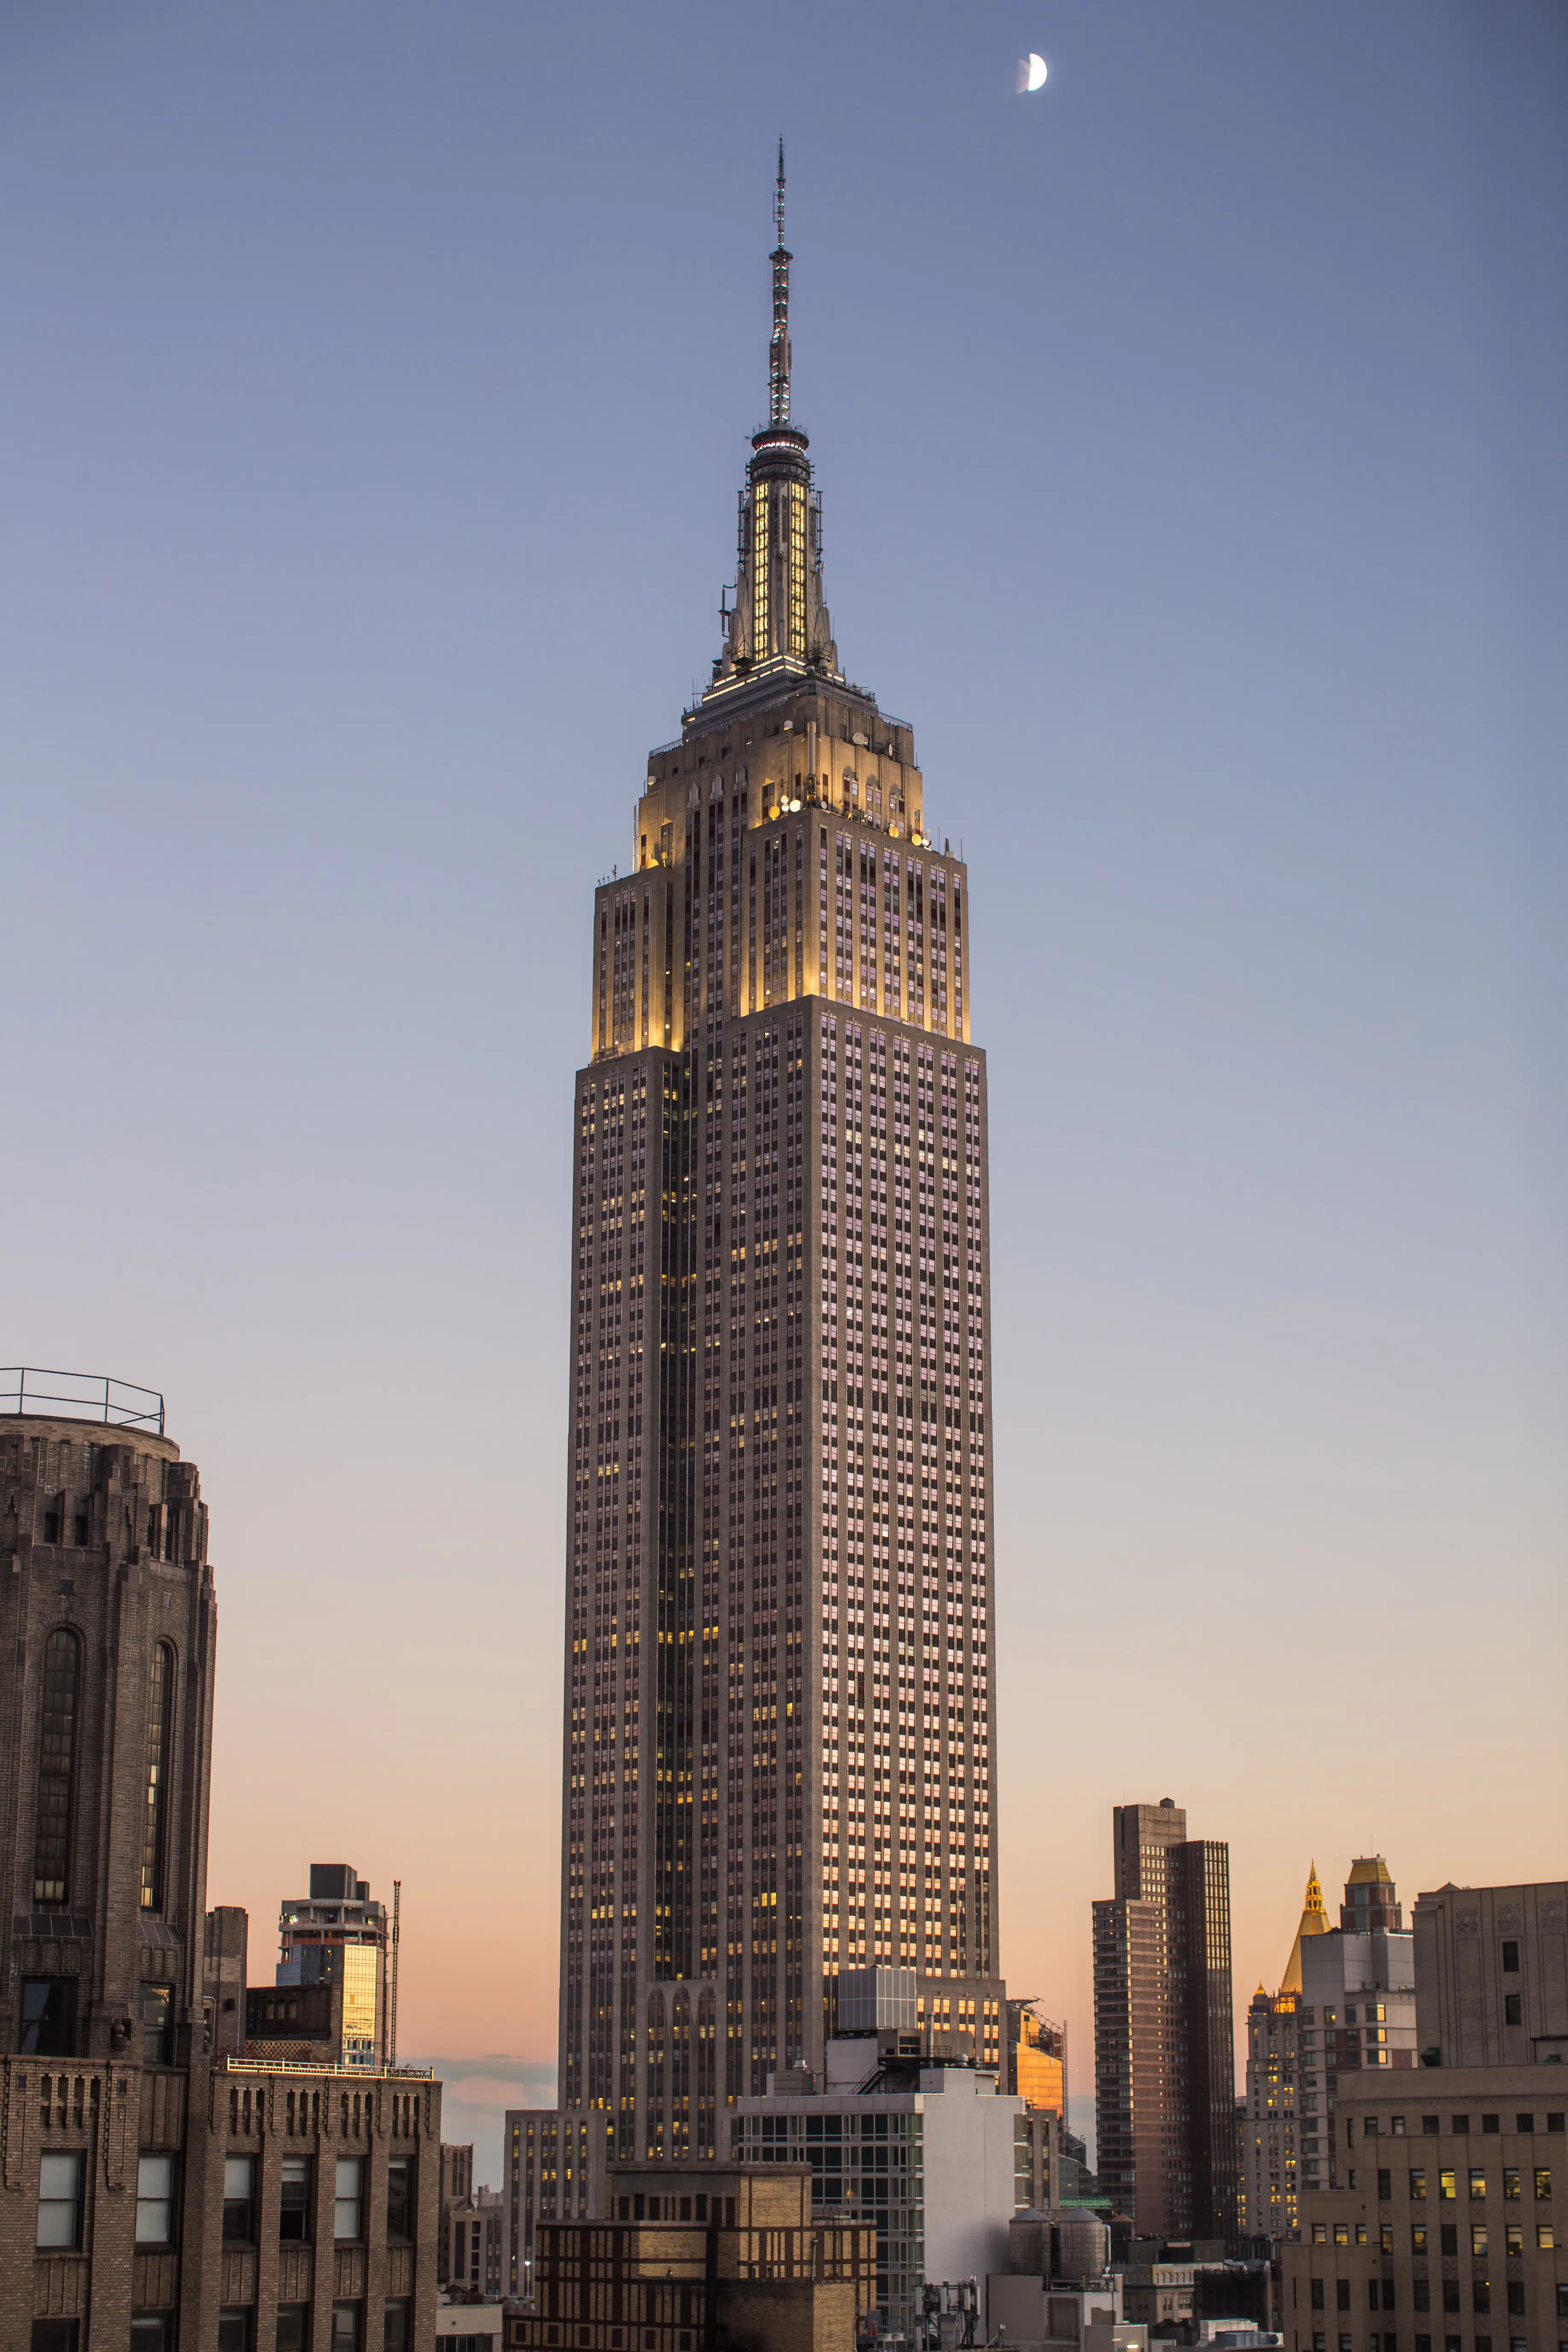 Visit New York's skyscrapers